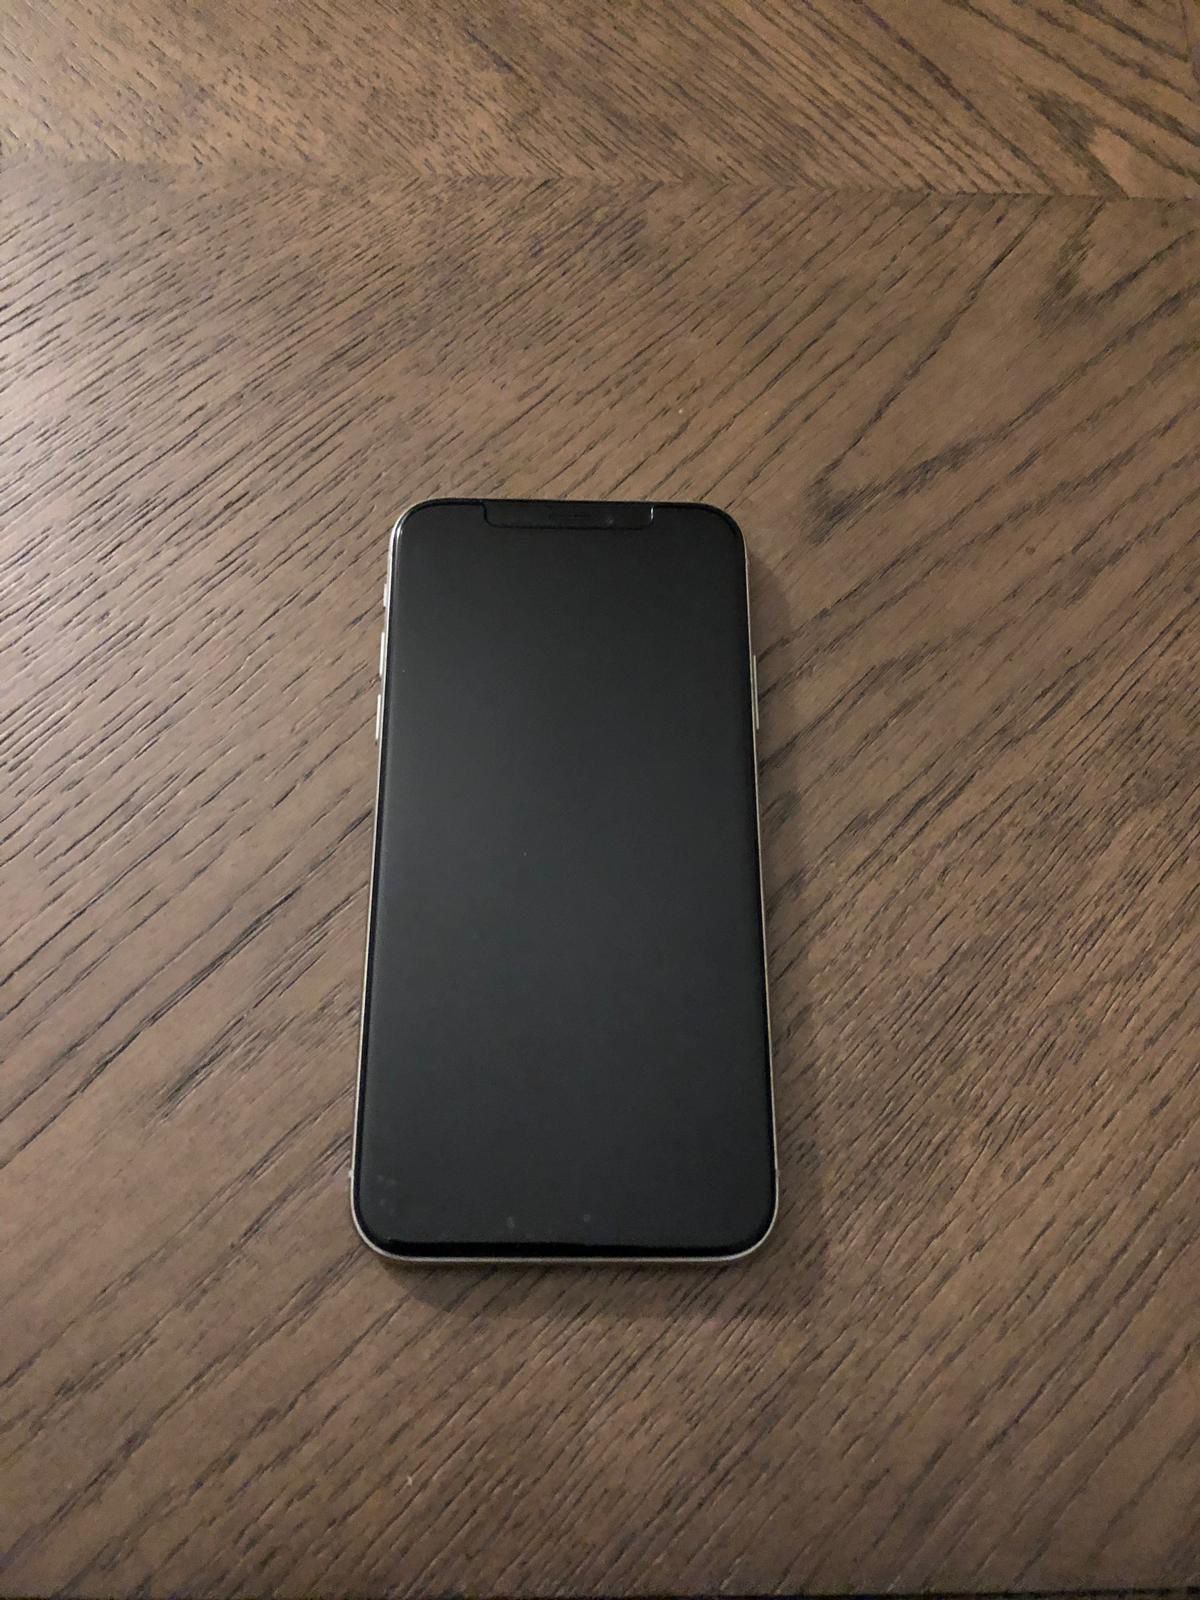 iPhone X silver 256 Gb Unlocked $800